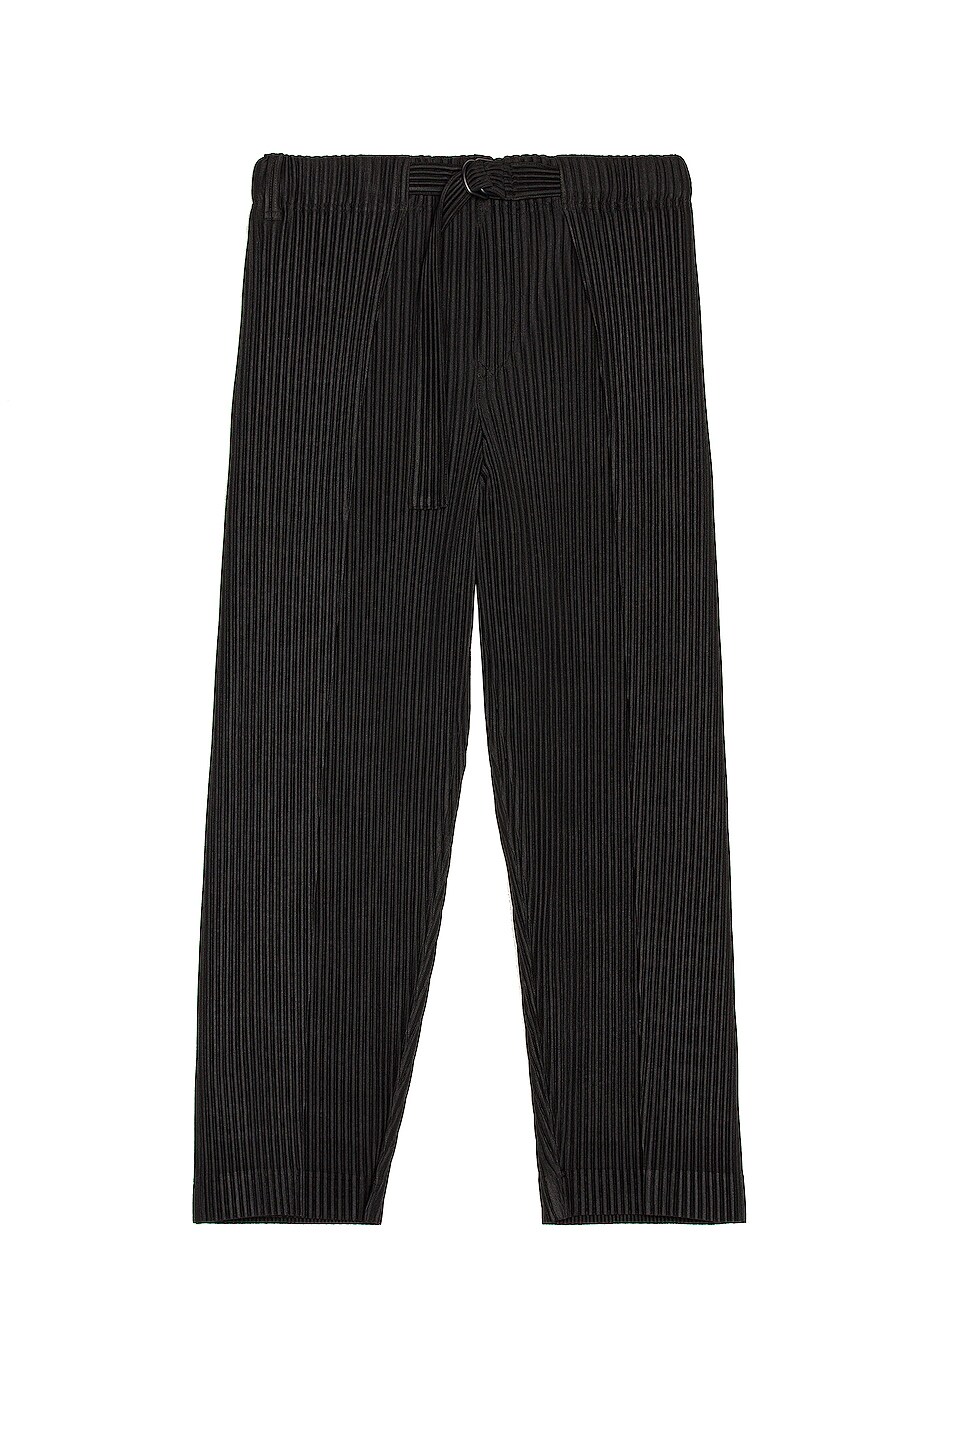 Image 1 of Homme Plisse Issey Miyake Tailored Pants in Black